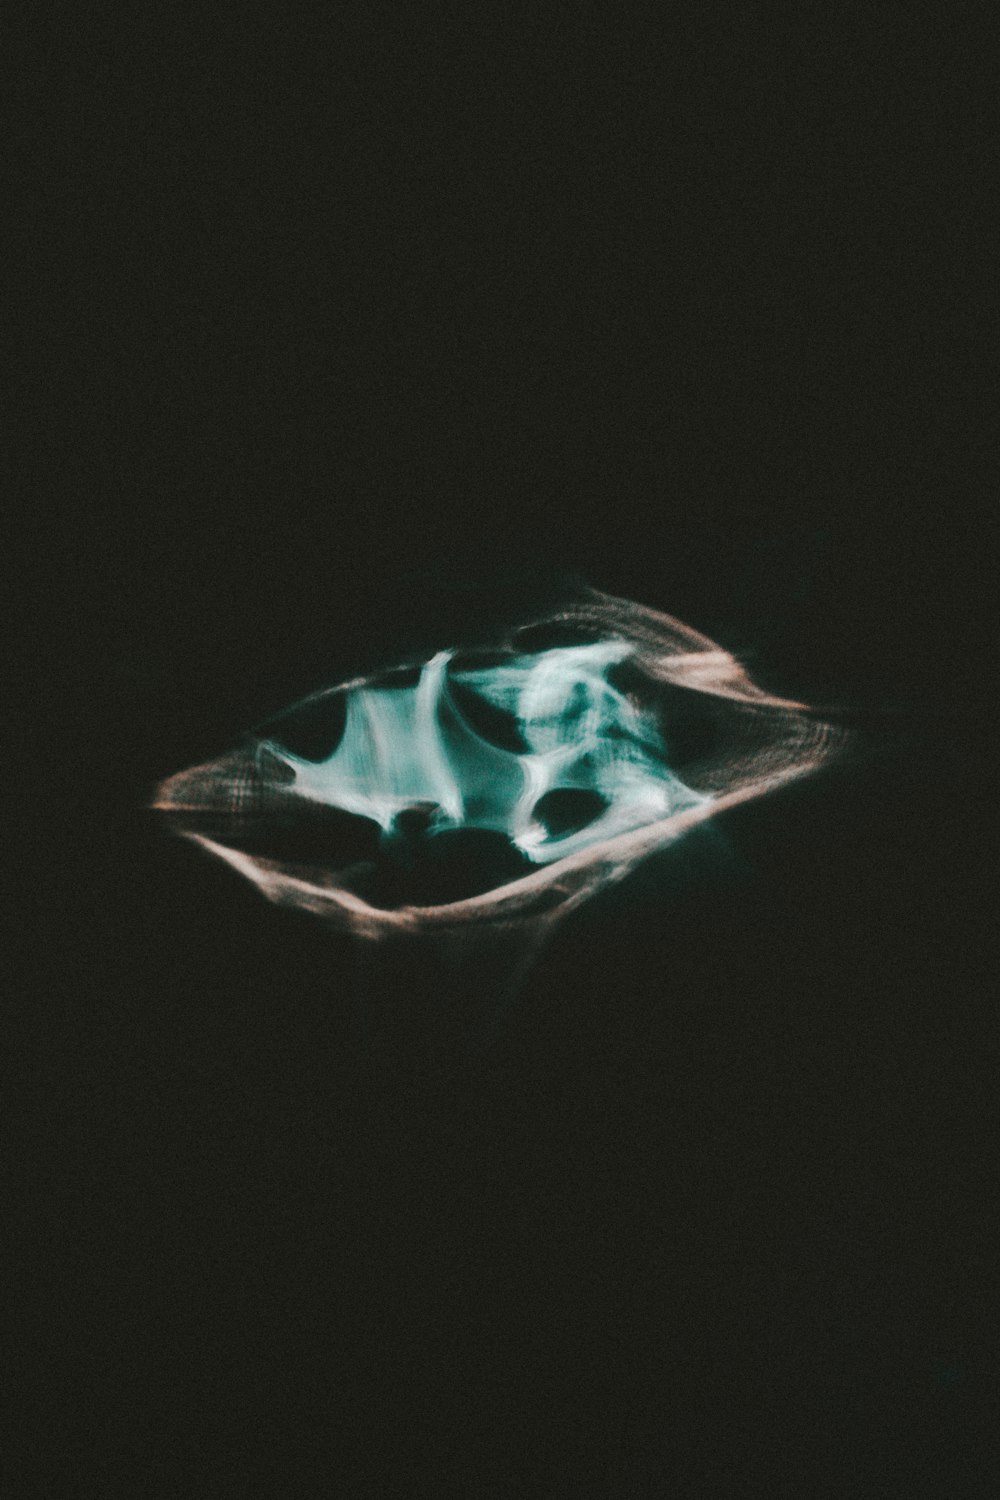 a blurry image of a leaf in the dark